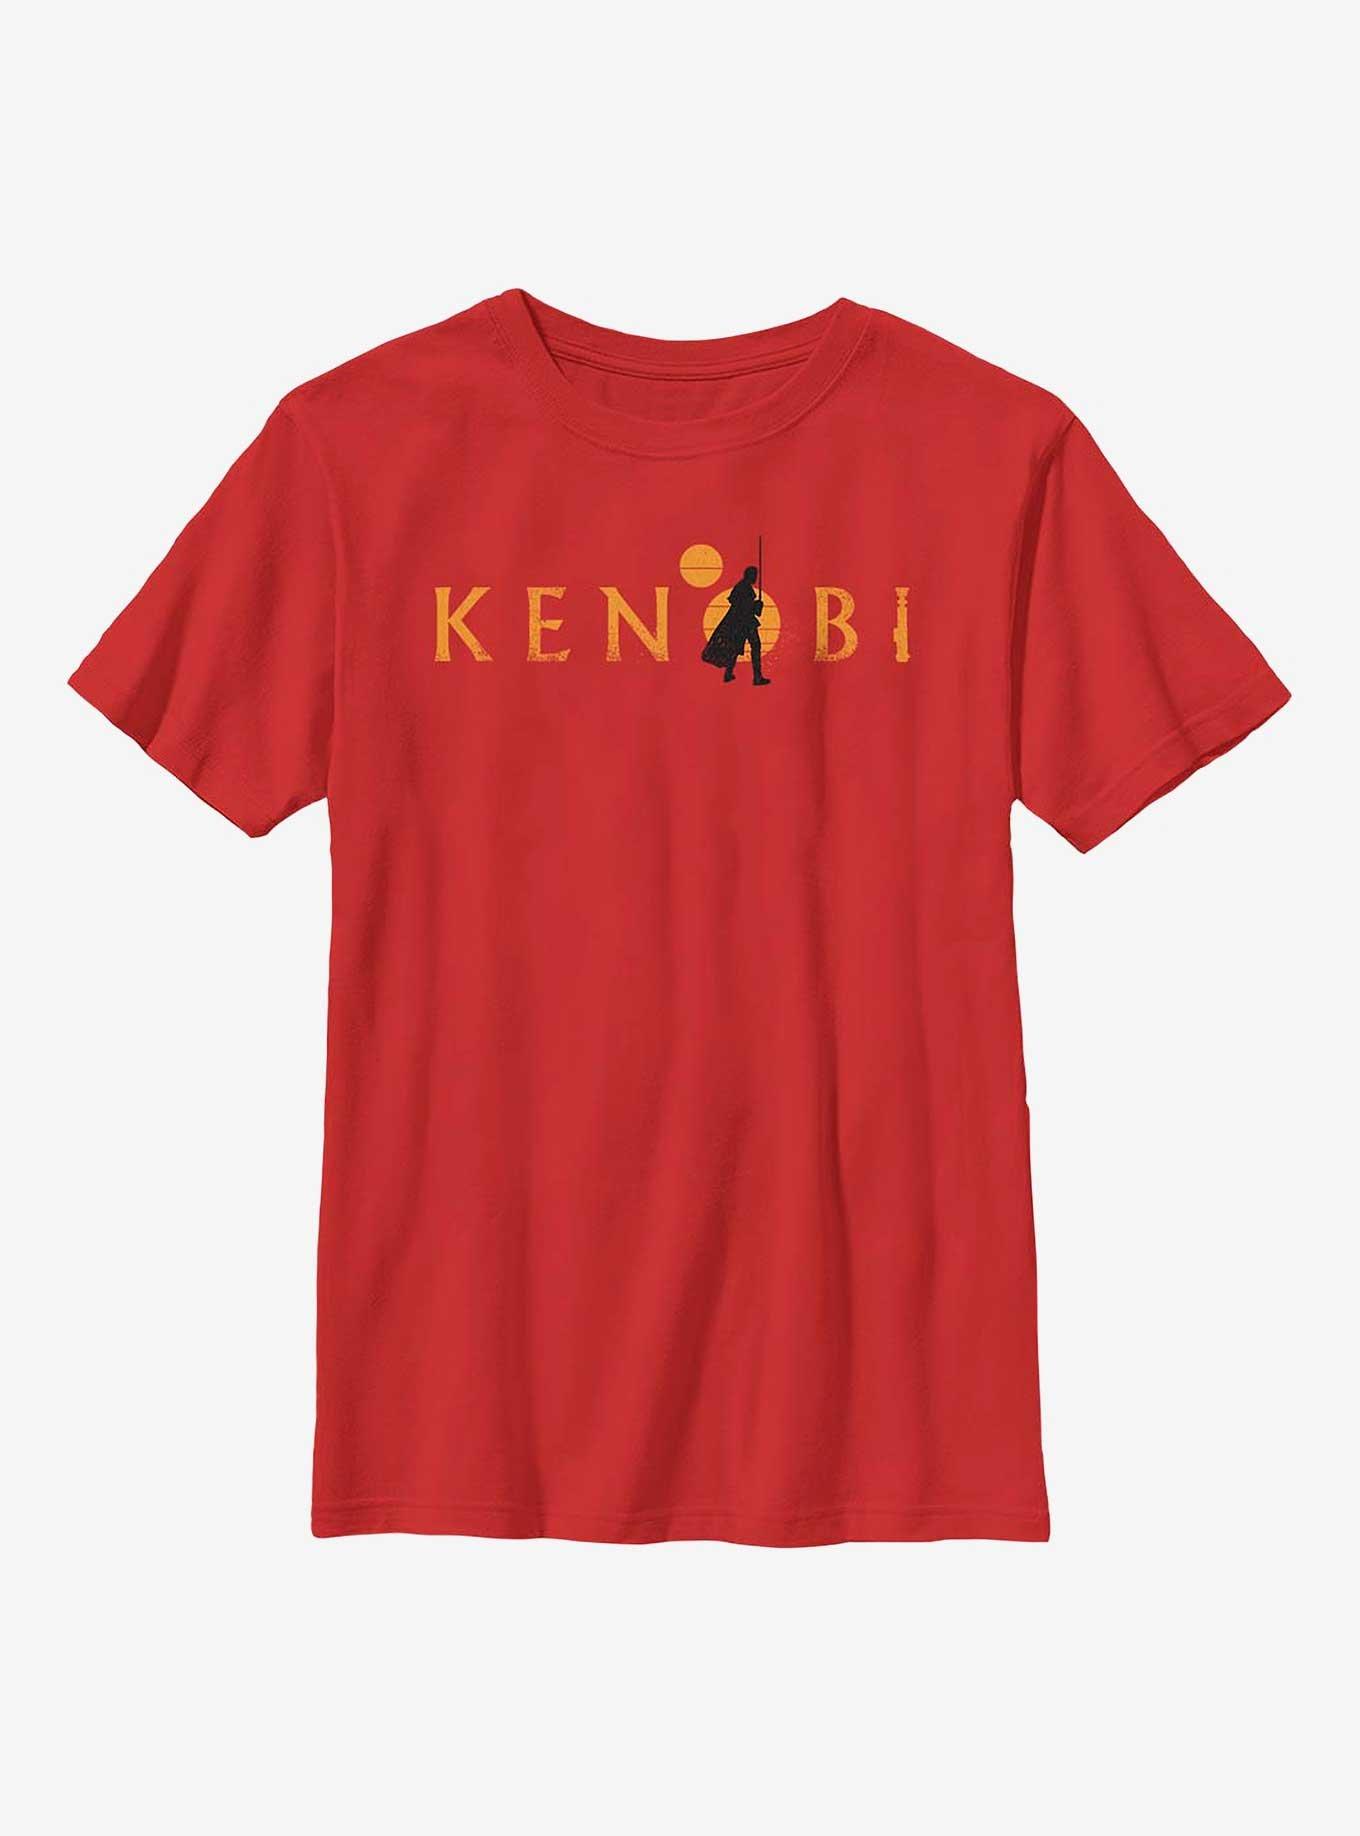 Star Wars Obi-Wan Kenobi Two Suns Logo Youth T-Shirt, RED, hi-res